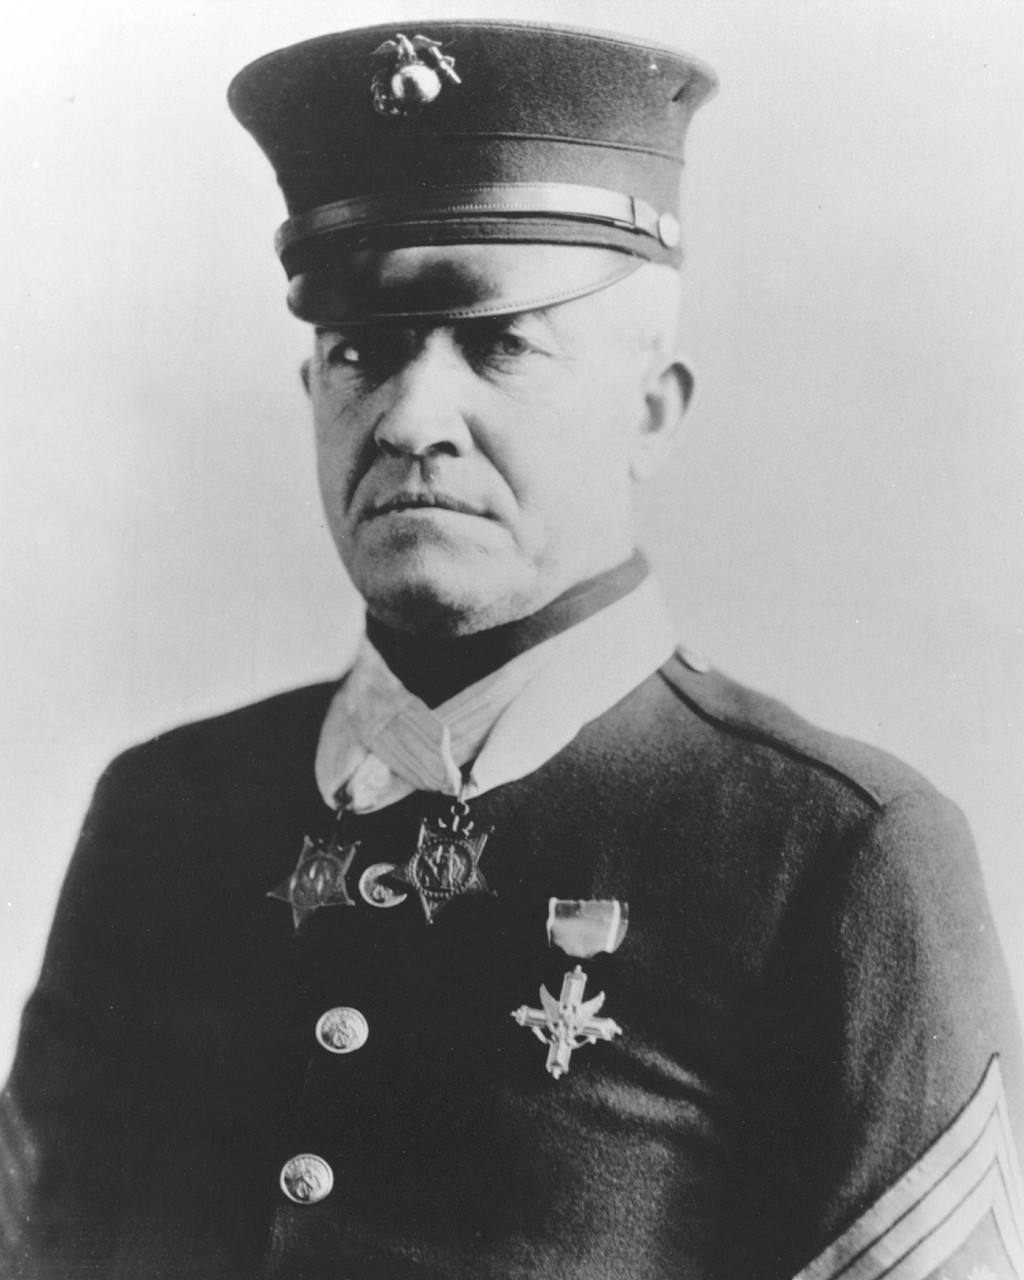 Photograph of Sergeant Major Daniel Joseph Daly